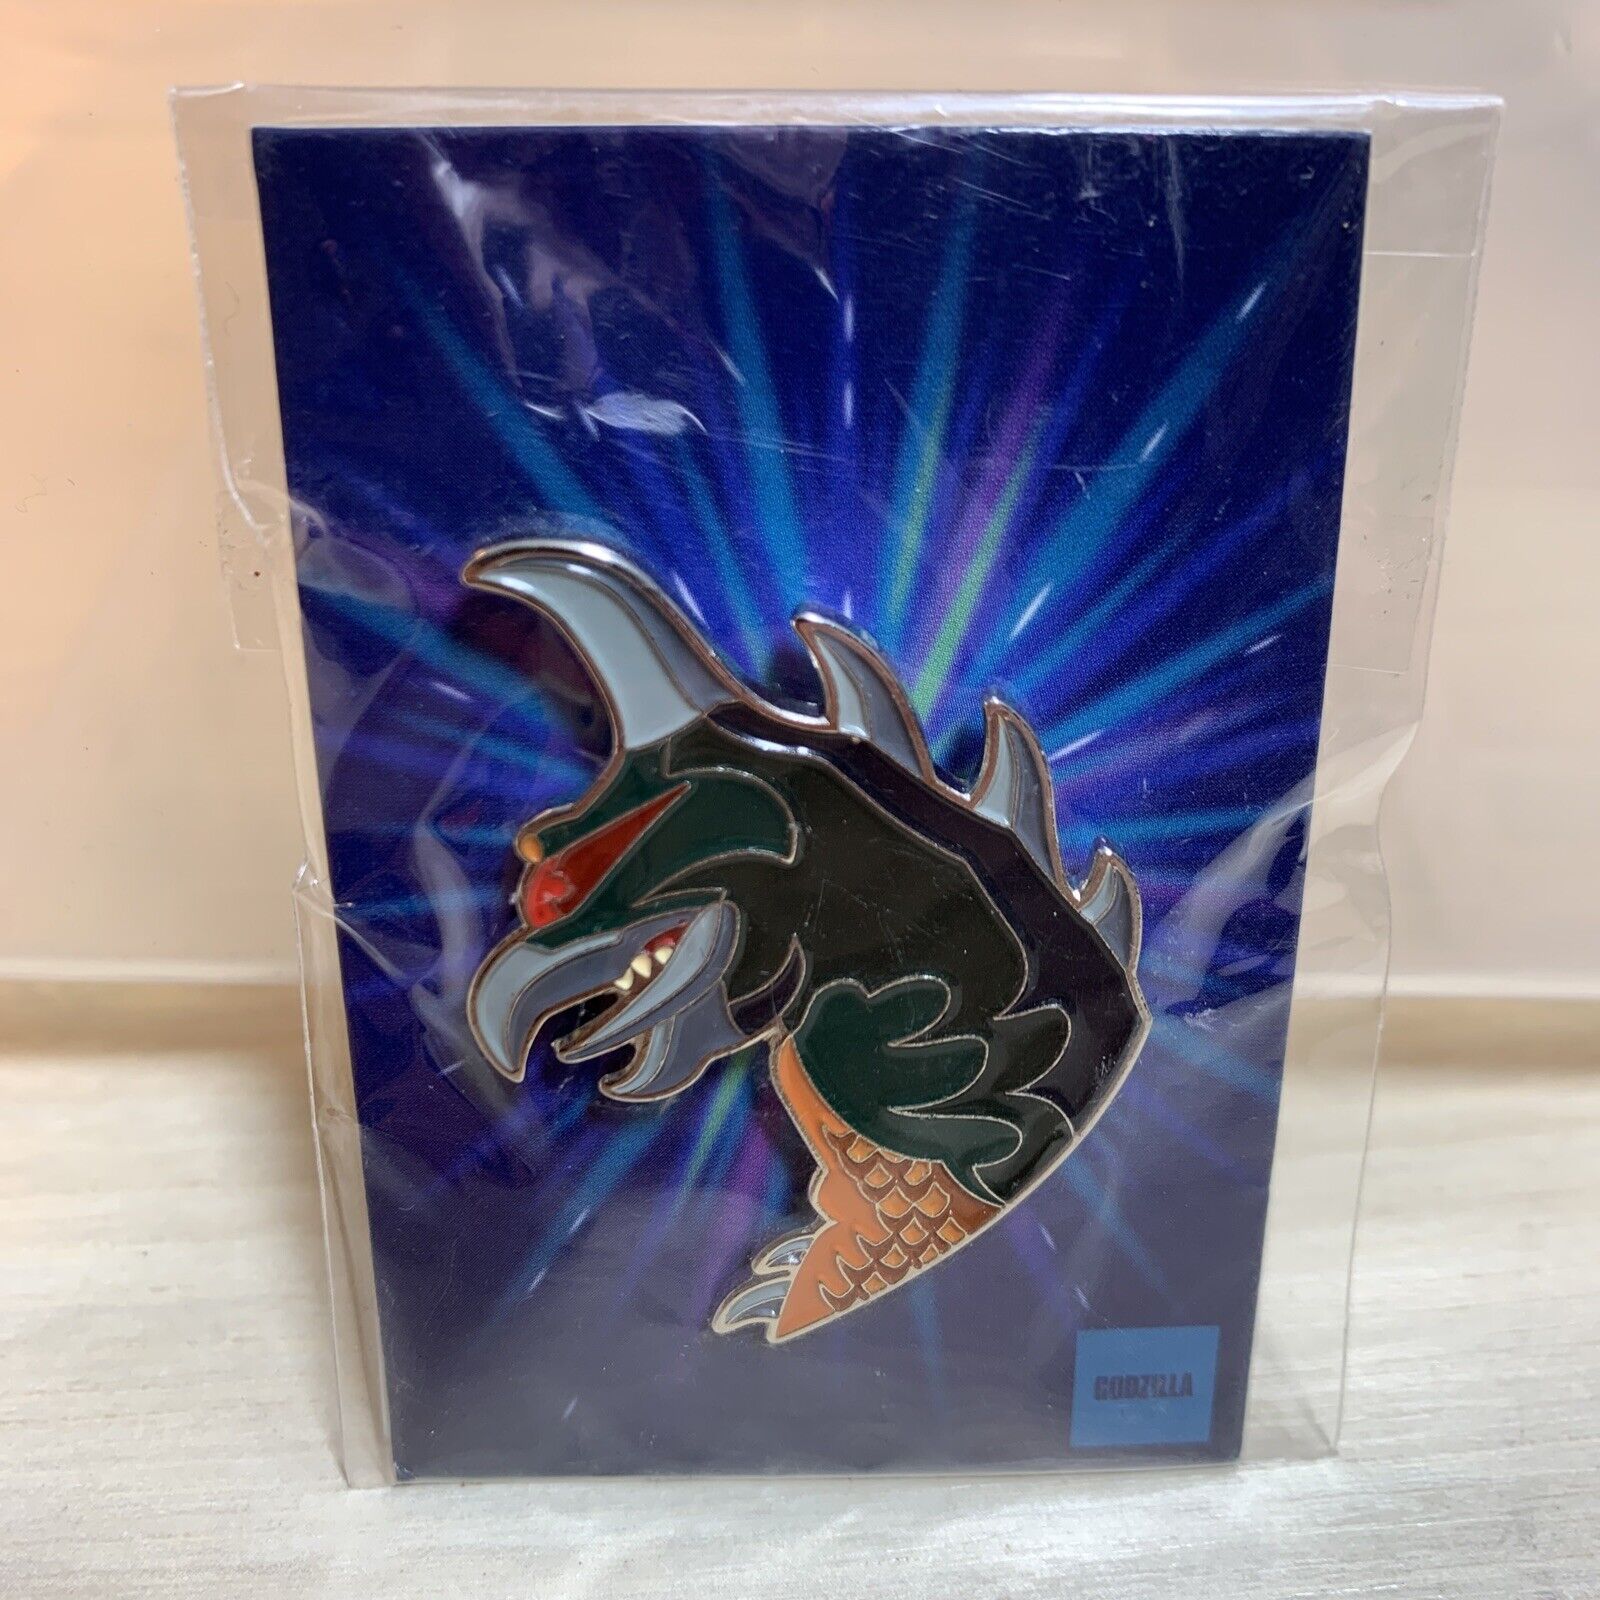 mondo Enamel pin limited edition sold out Gigan godzilla kaiju japan